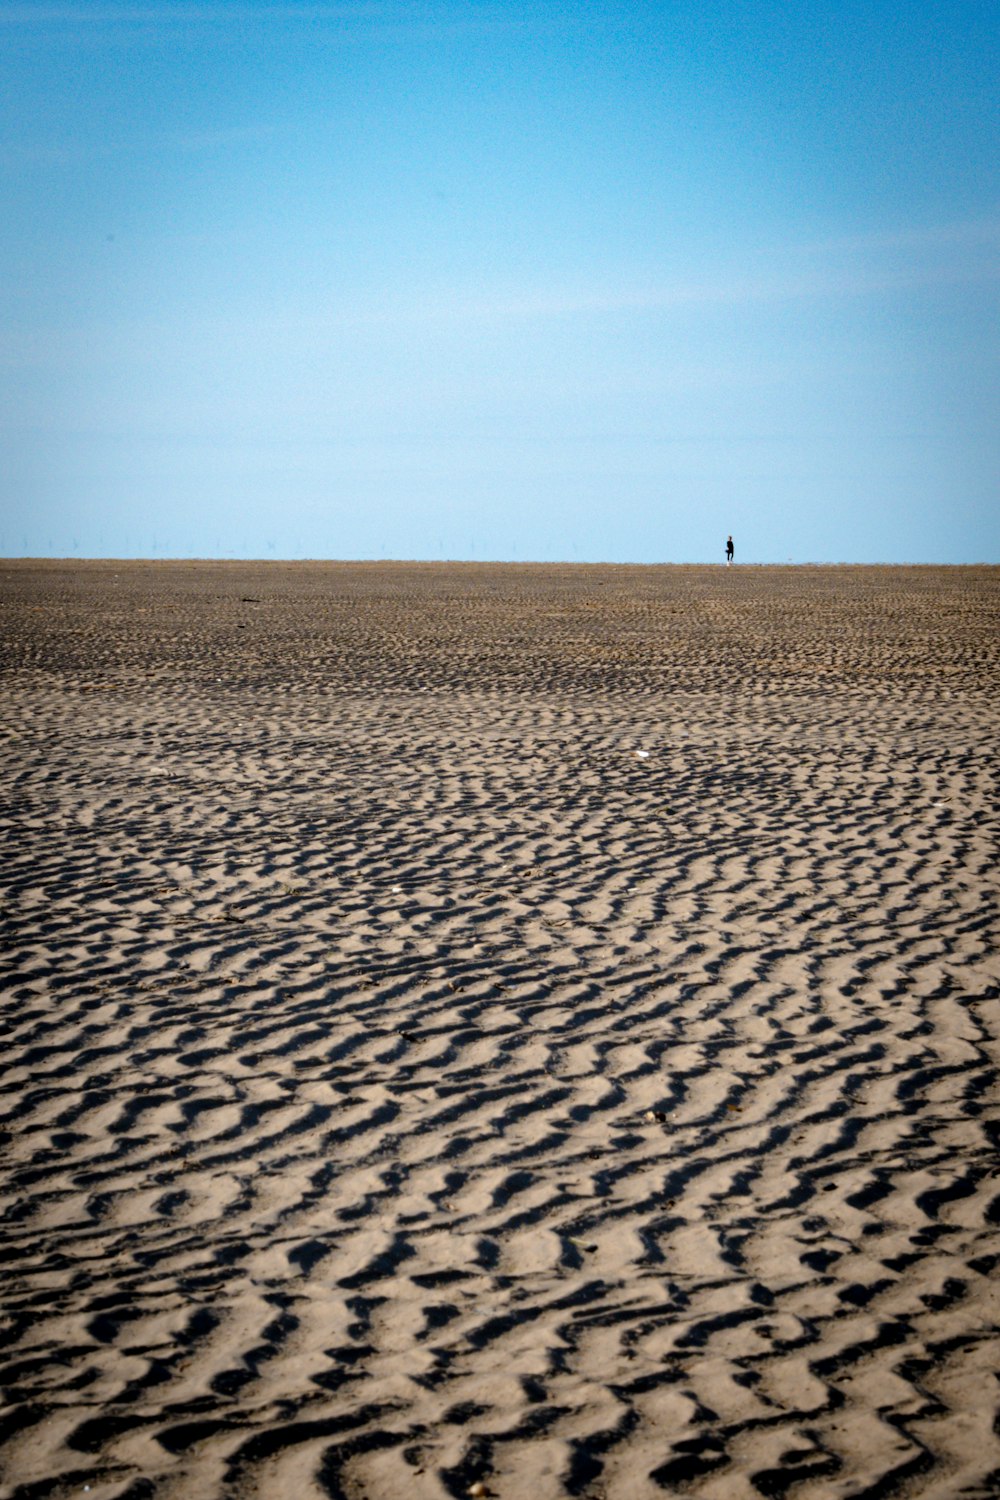 a person walking across a sandy beach under a blue sky